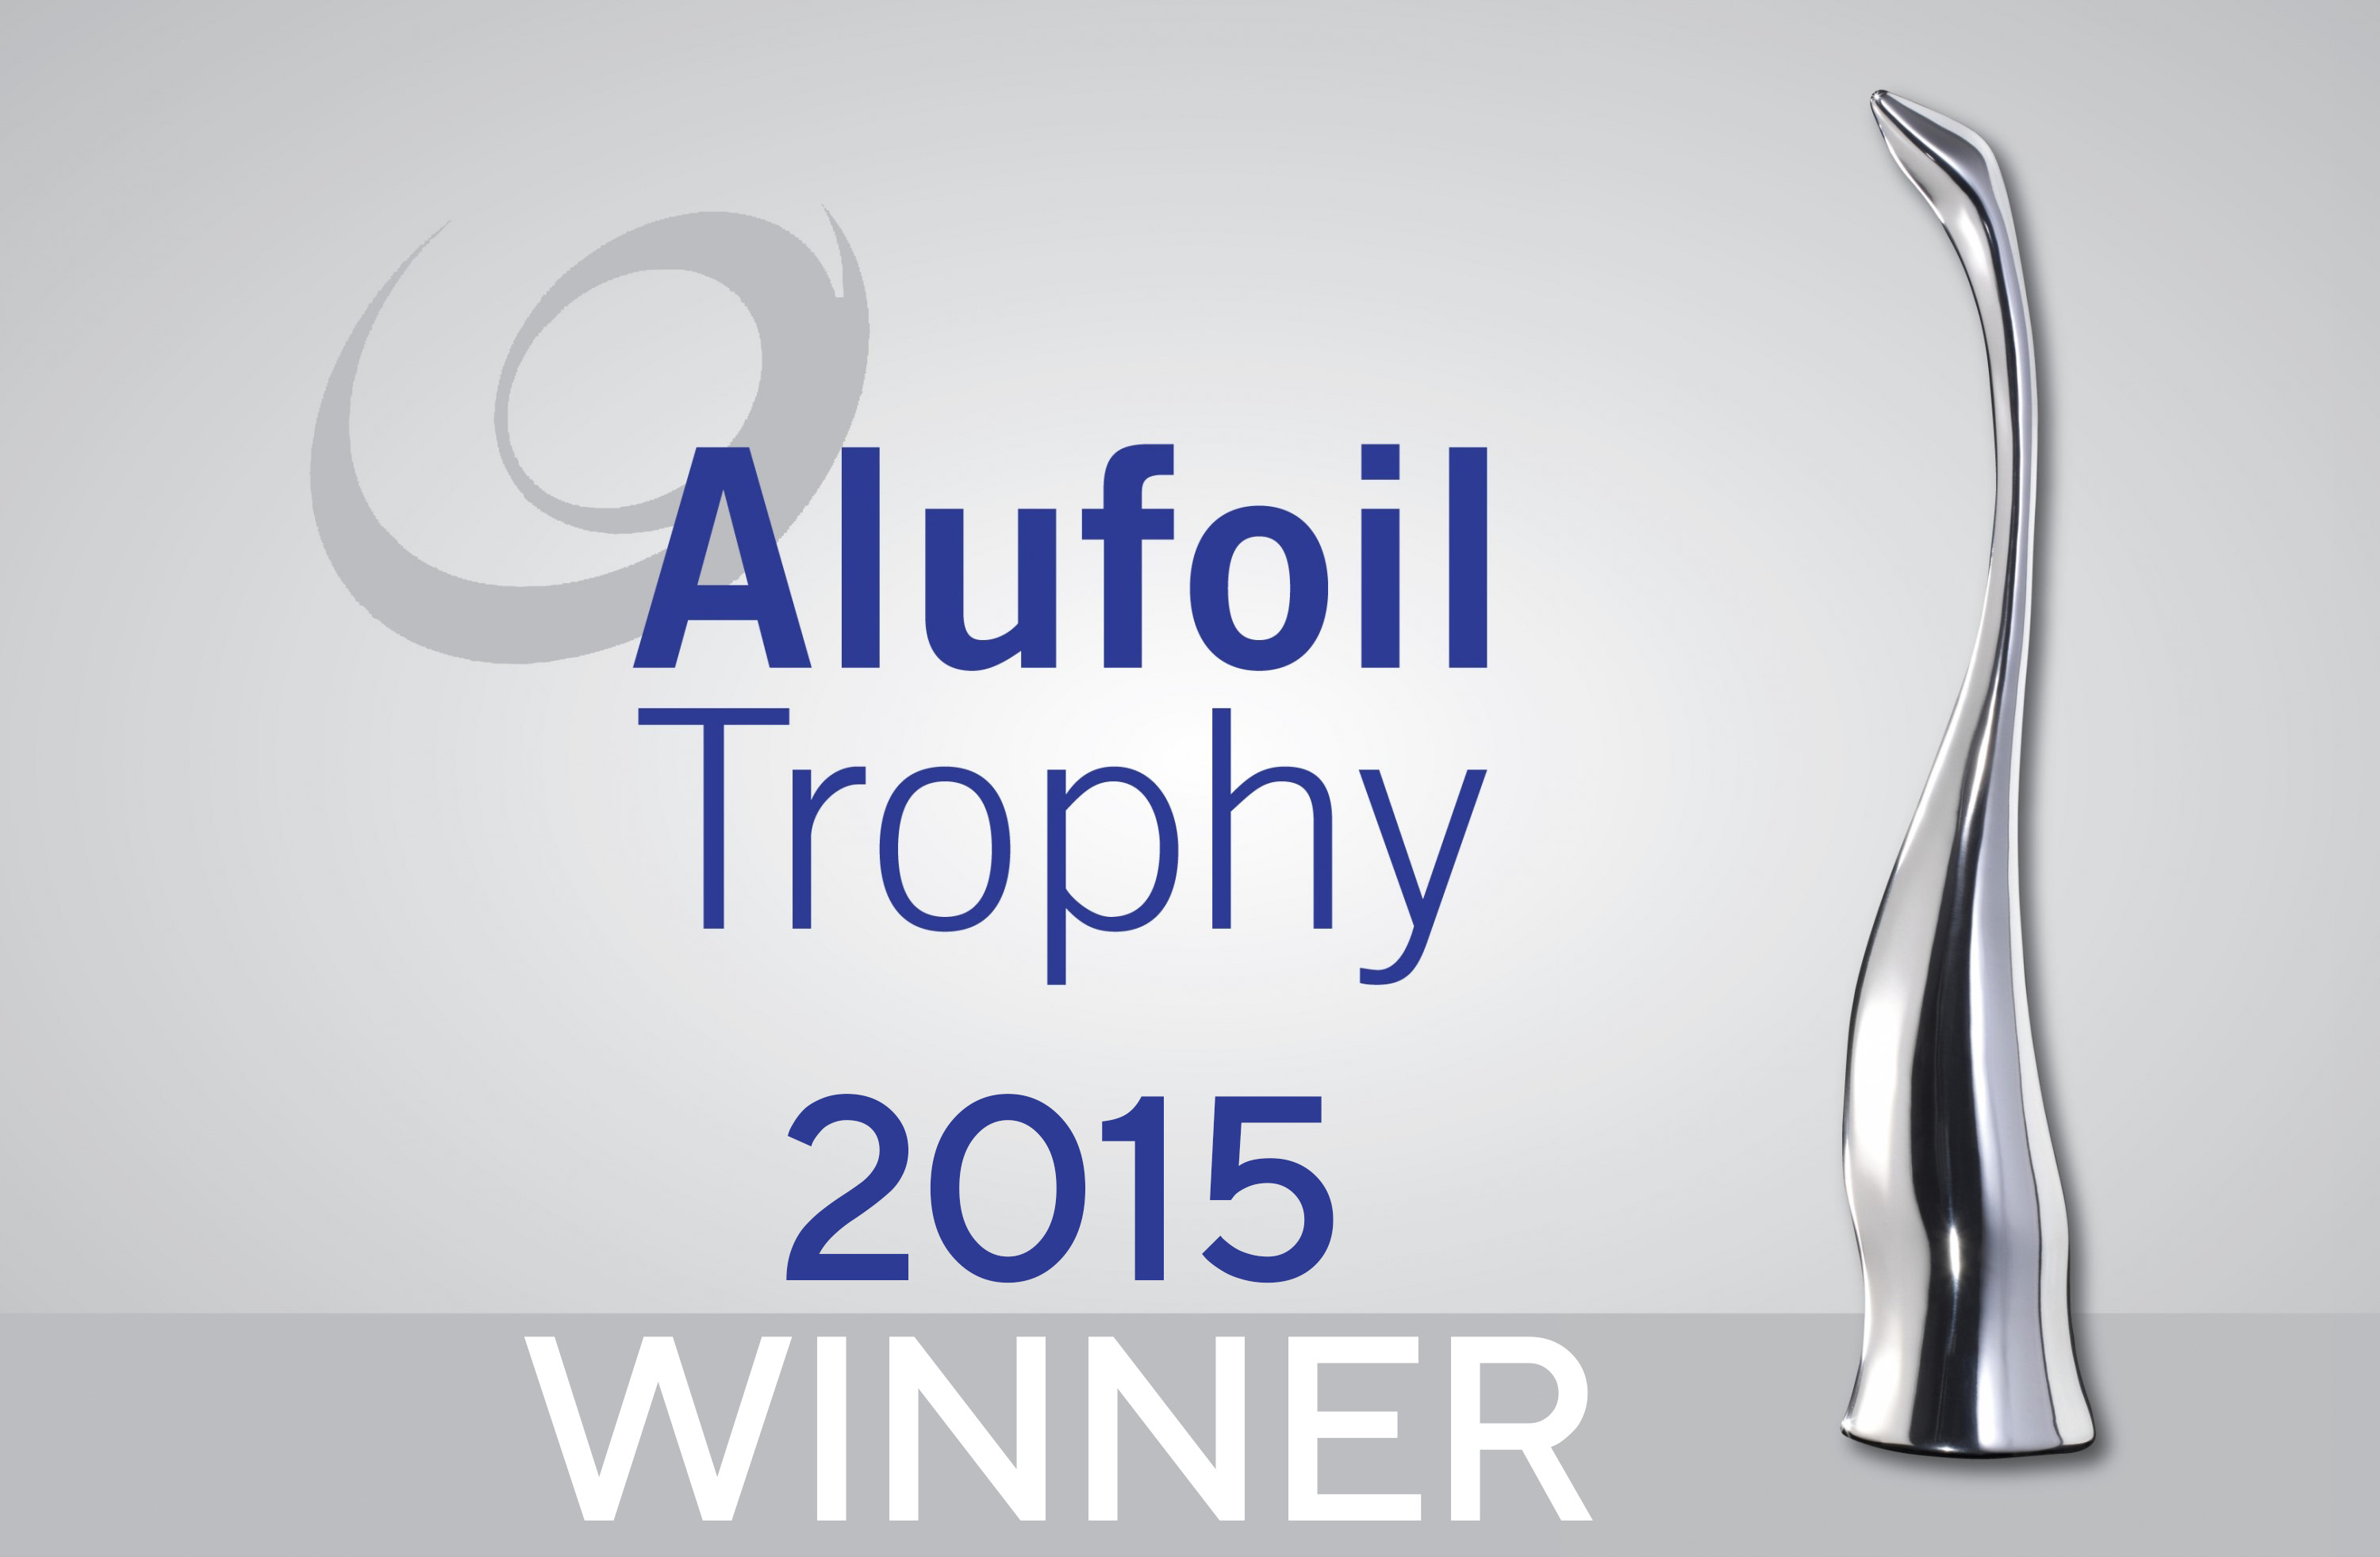 Alufoil Trophy 2015